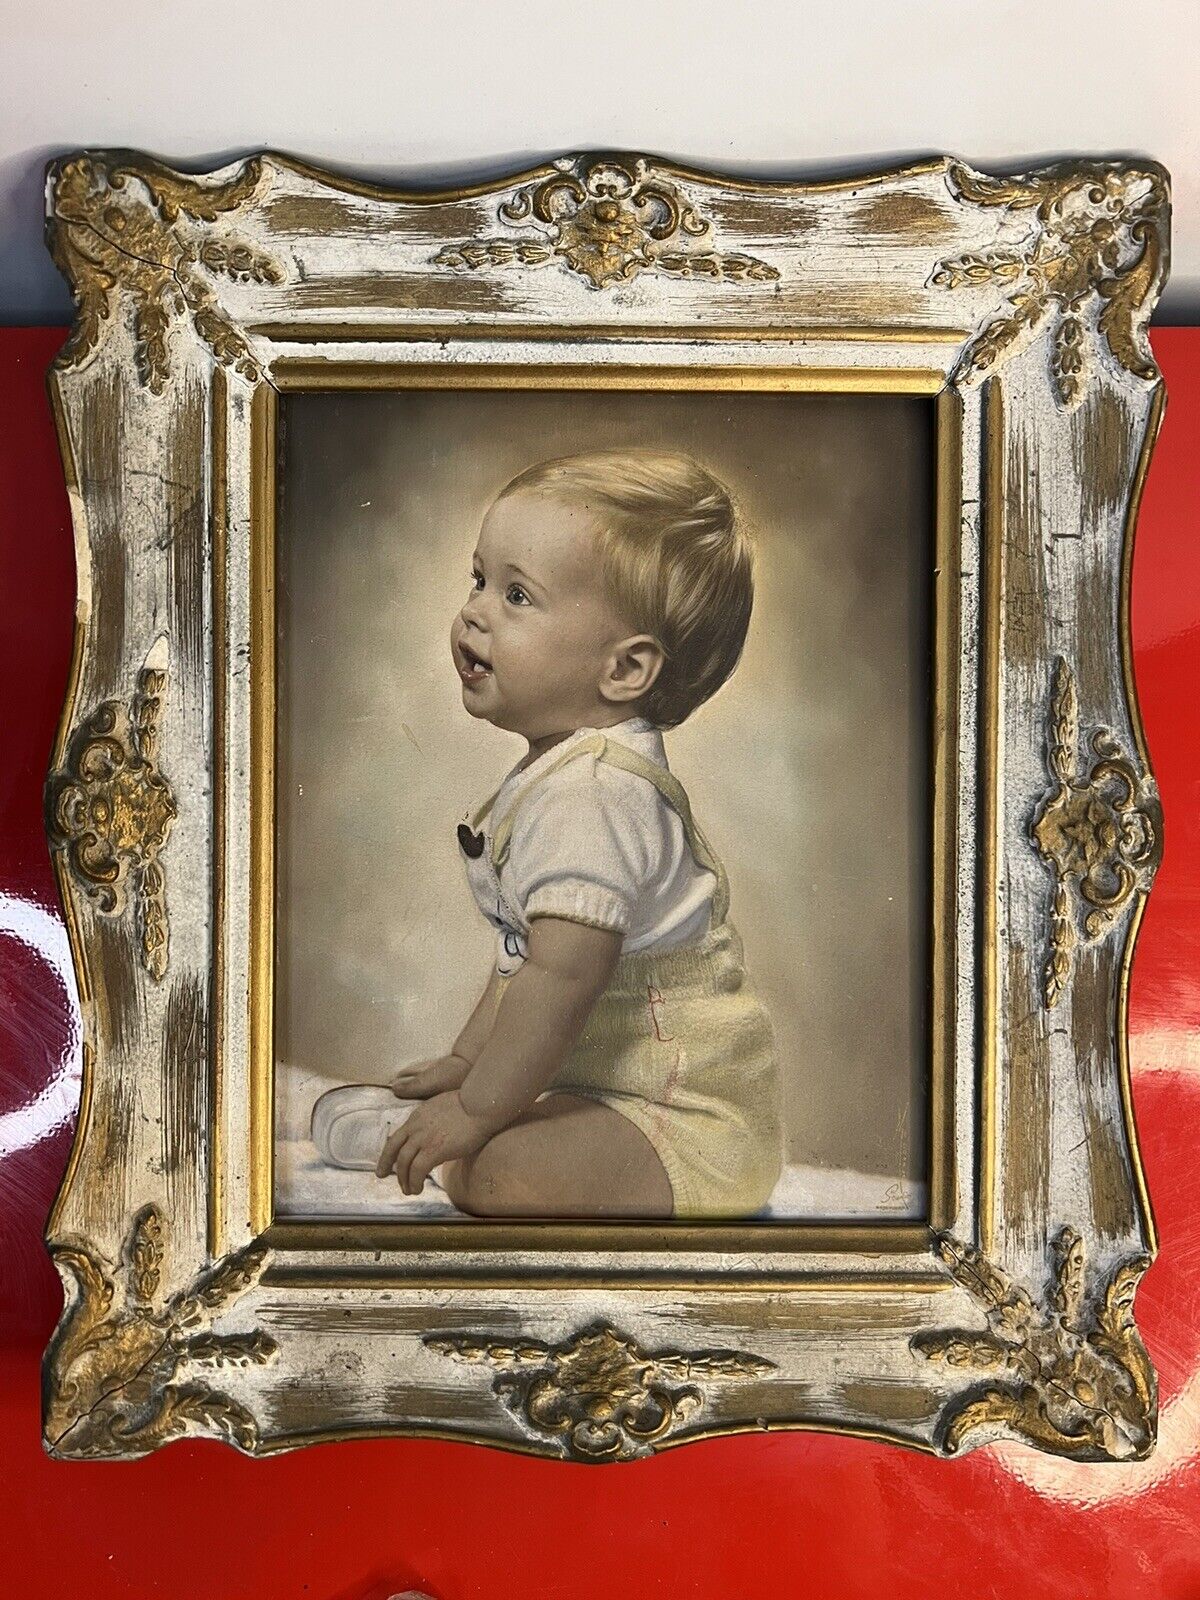 Vintage BEAUTIFUL CHILD PORTRAIT OF BABY. COLORED PHOTOGRAPH? mc donald studio